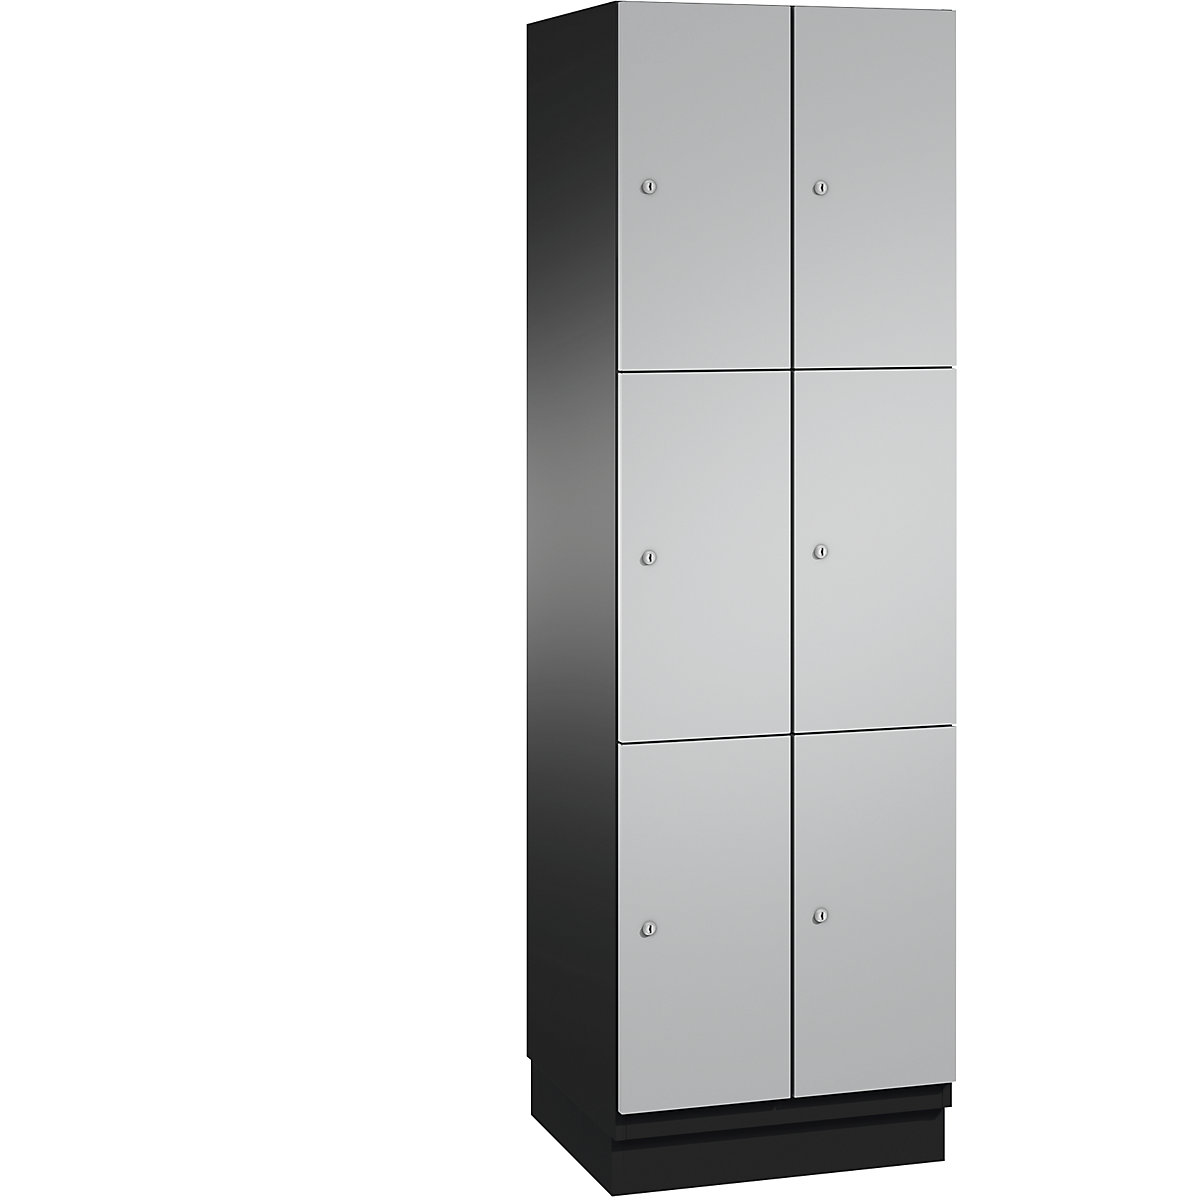 CAMBIO compartment locker with sheet steel doors – C+P, 6 compartments, width 600 mm, body black grey / door white aluminium-6